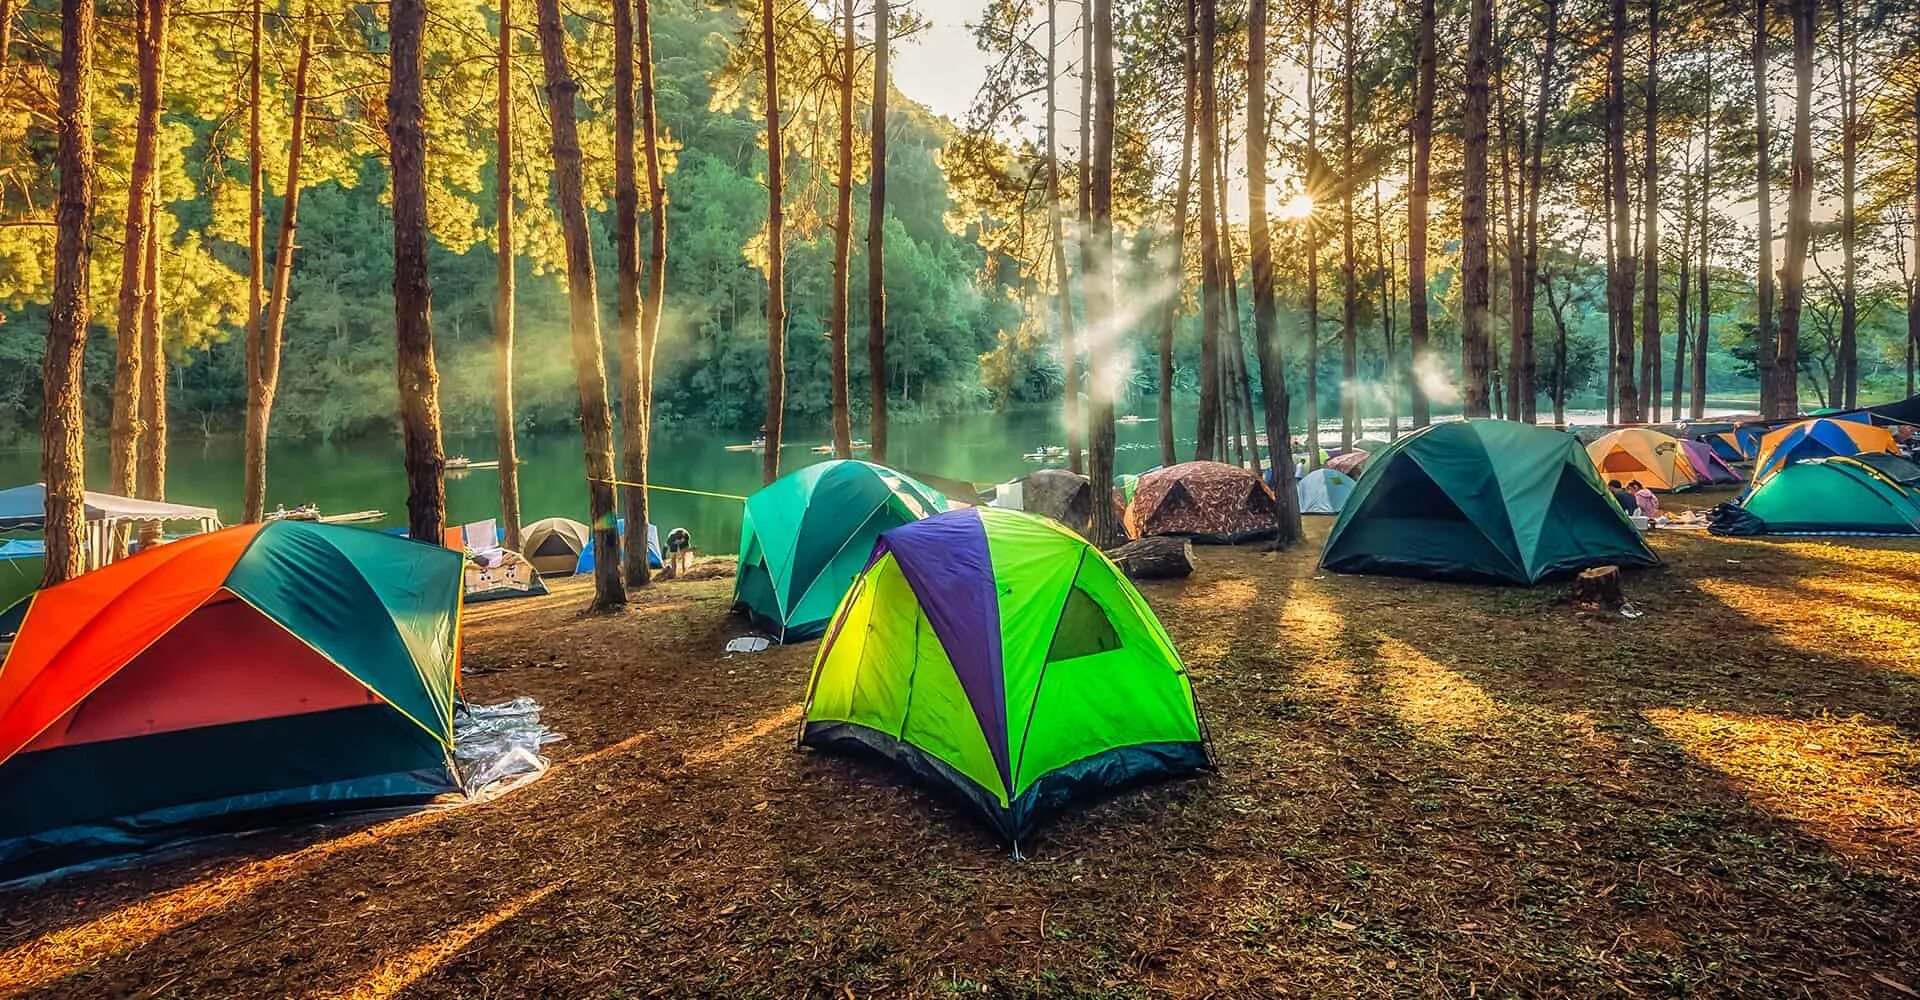 Stay in a camp. Палатка в лесу. Палатки для кемпинга. Палаточный лагерь. Палаточный лагерь в лесу.